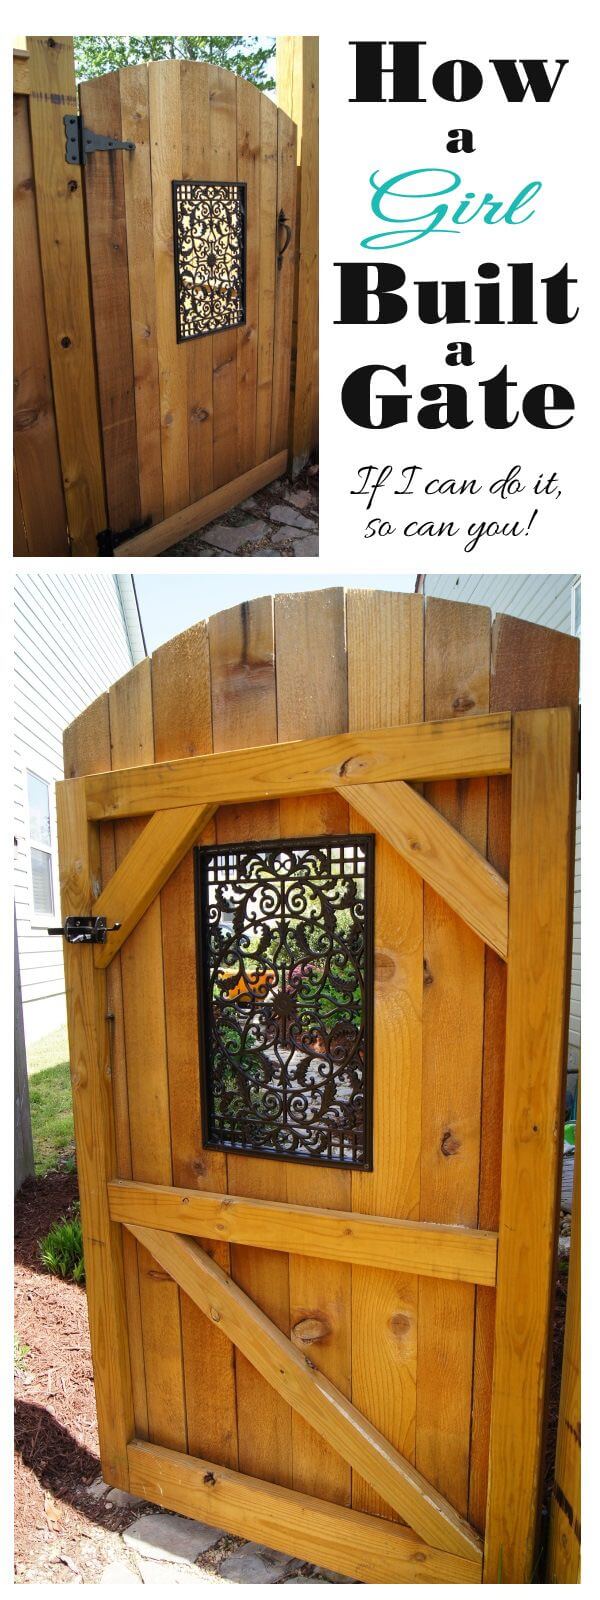 DIY Backyard Decorative Wooden Gate